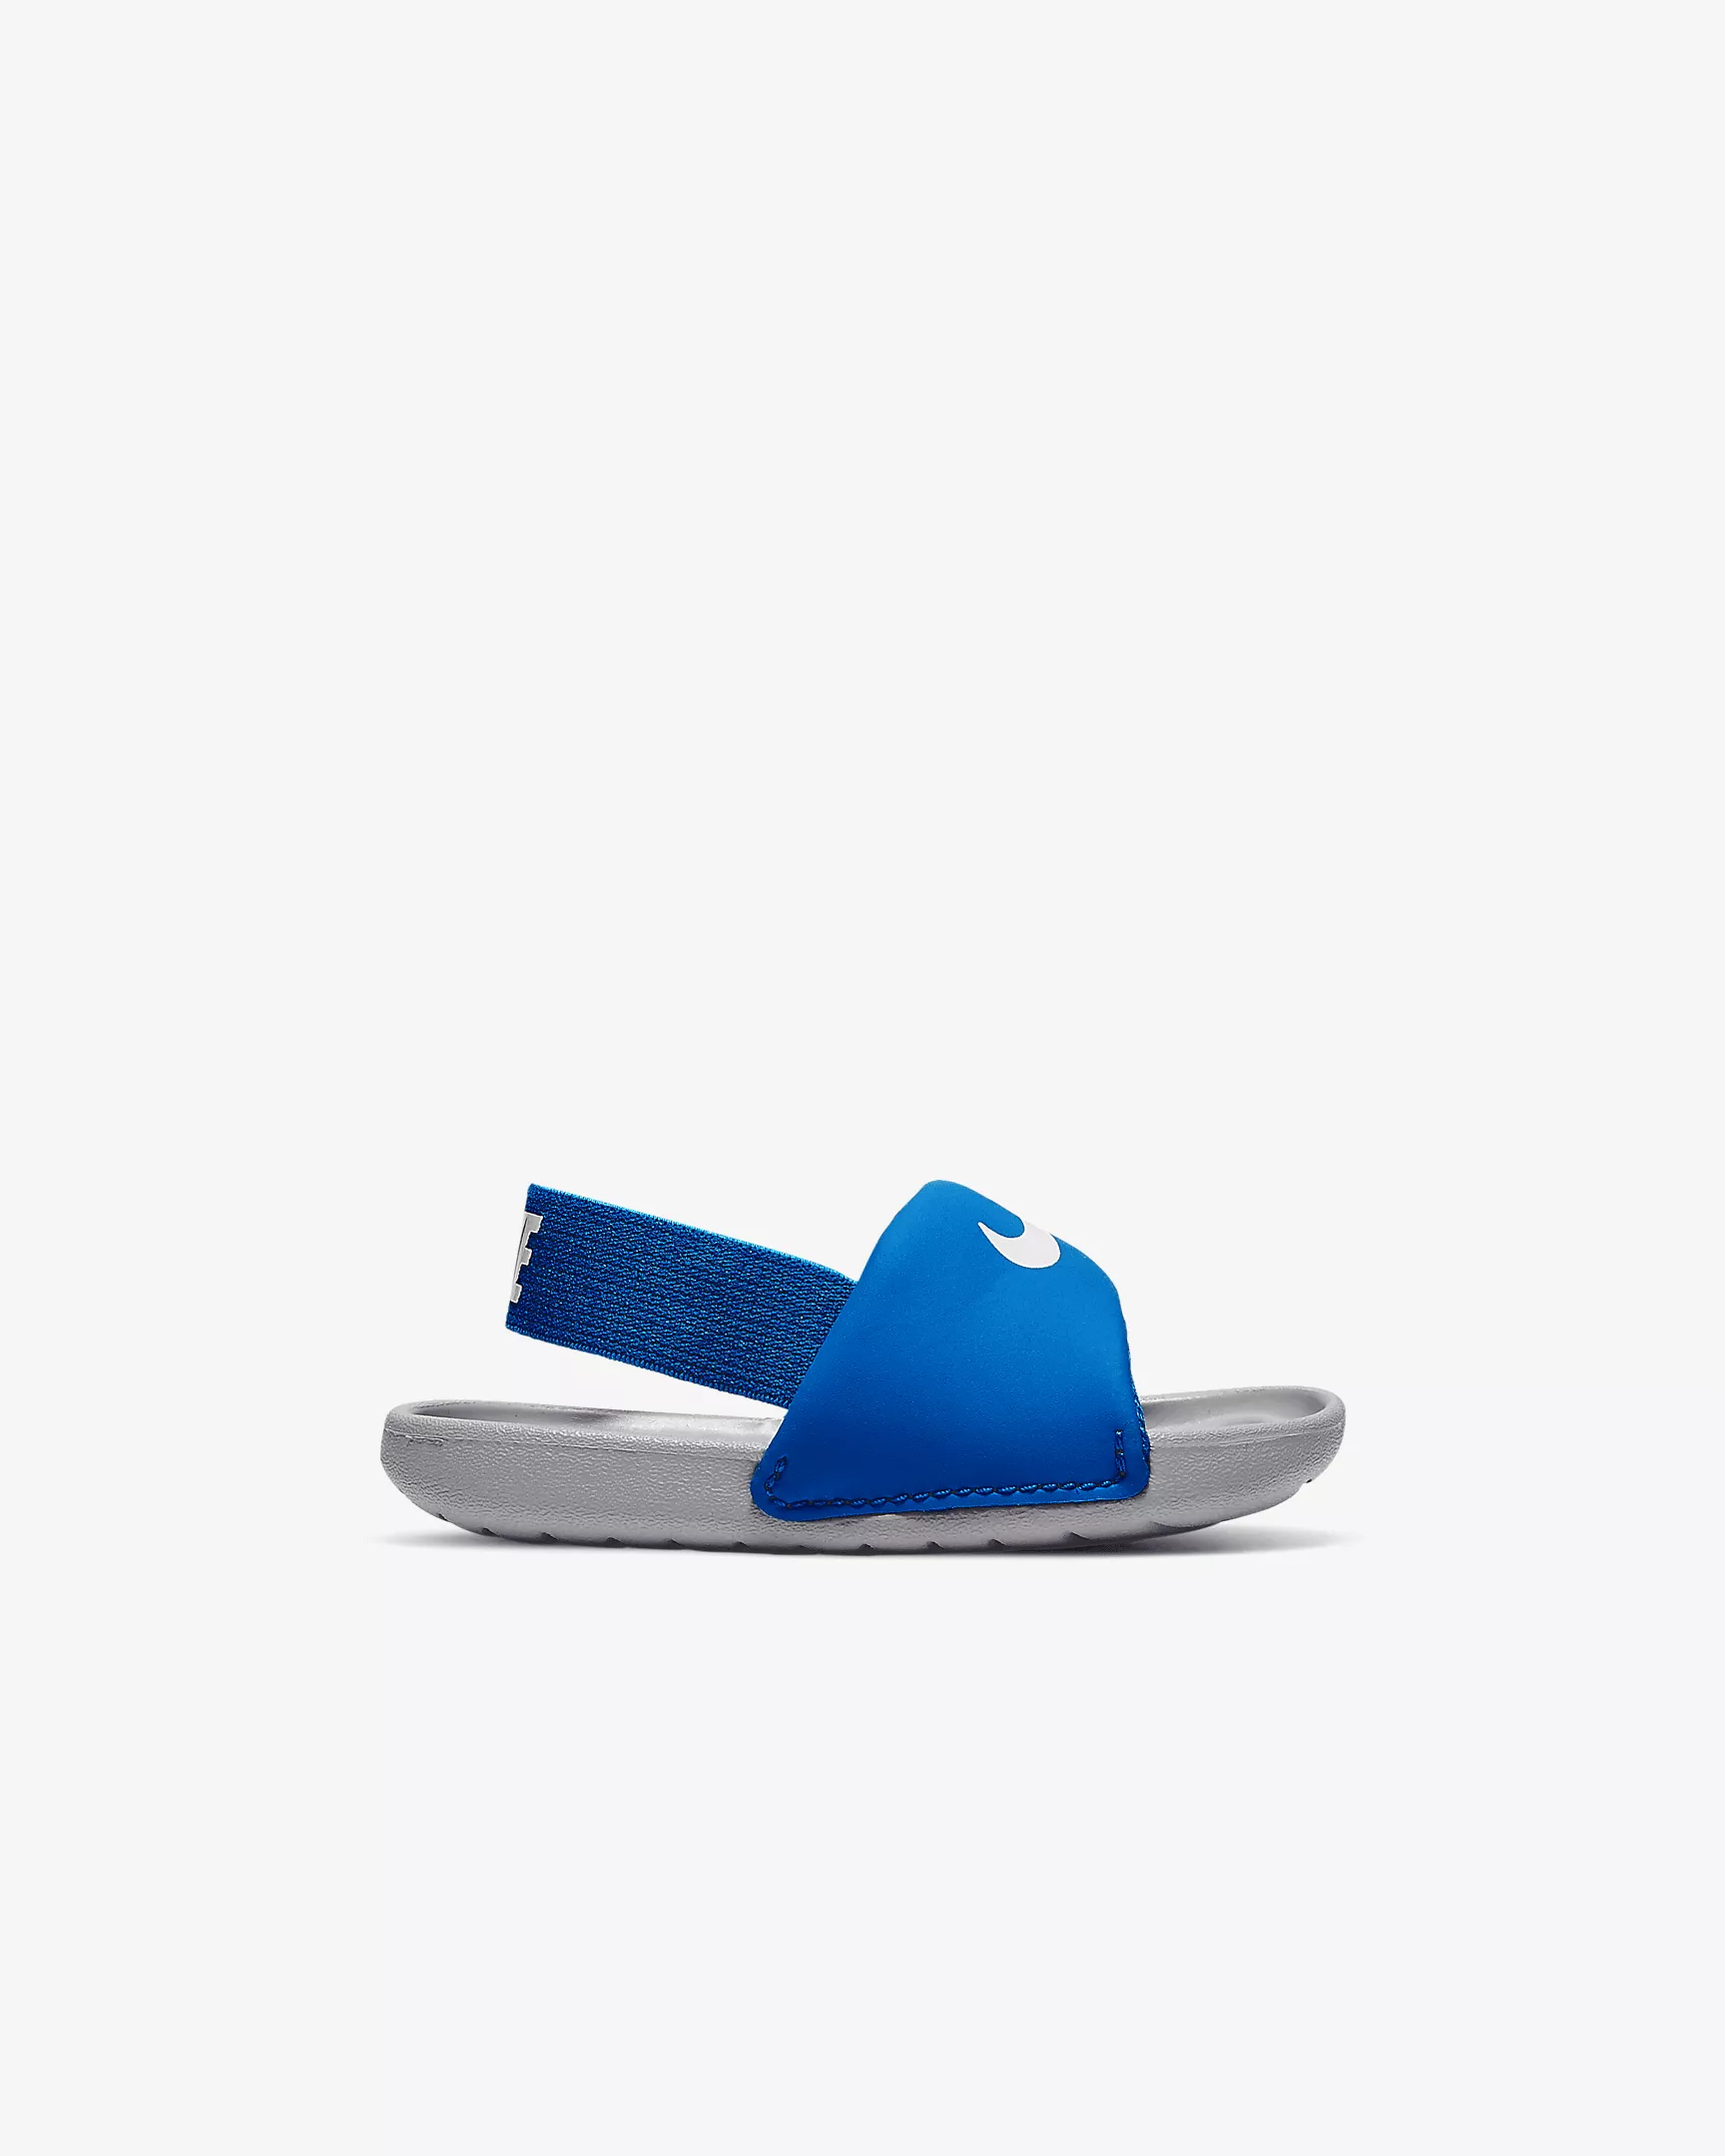 Nike Kawa Baby's Slides